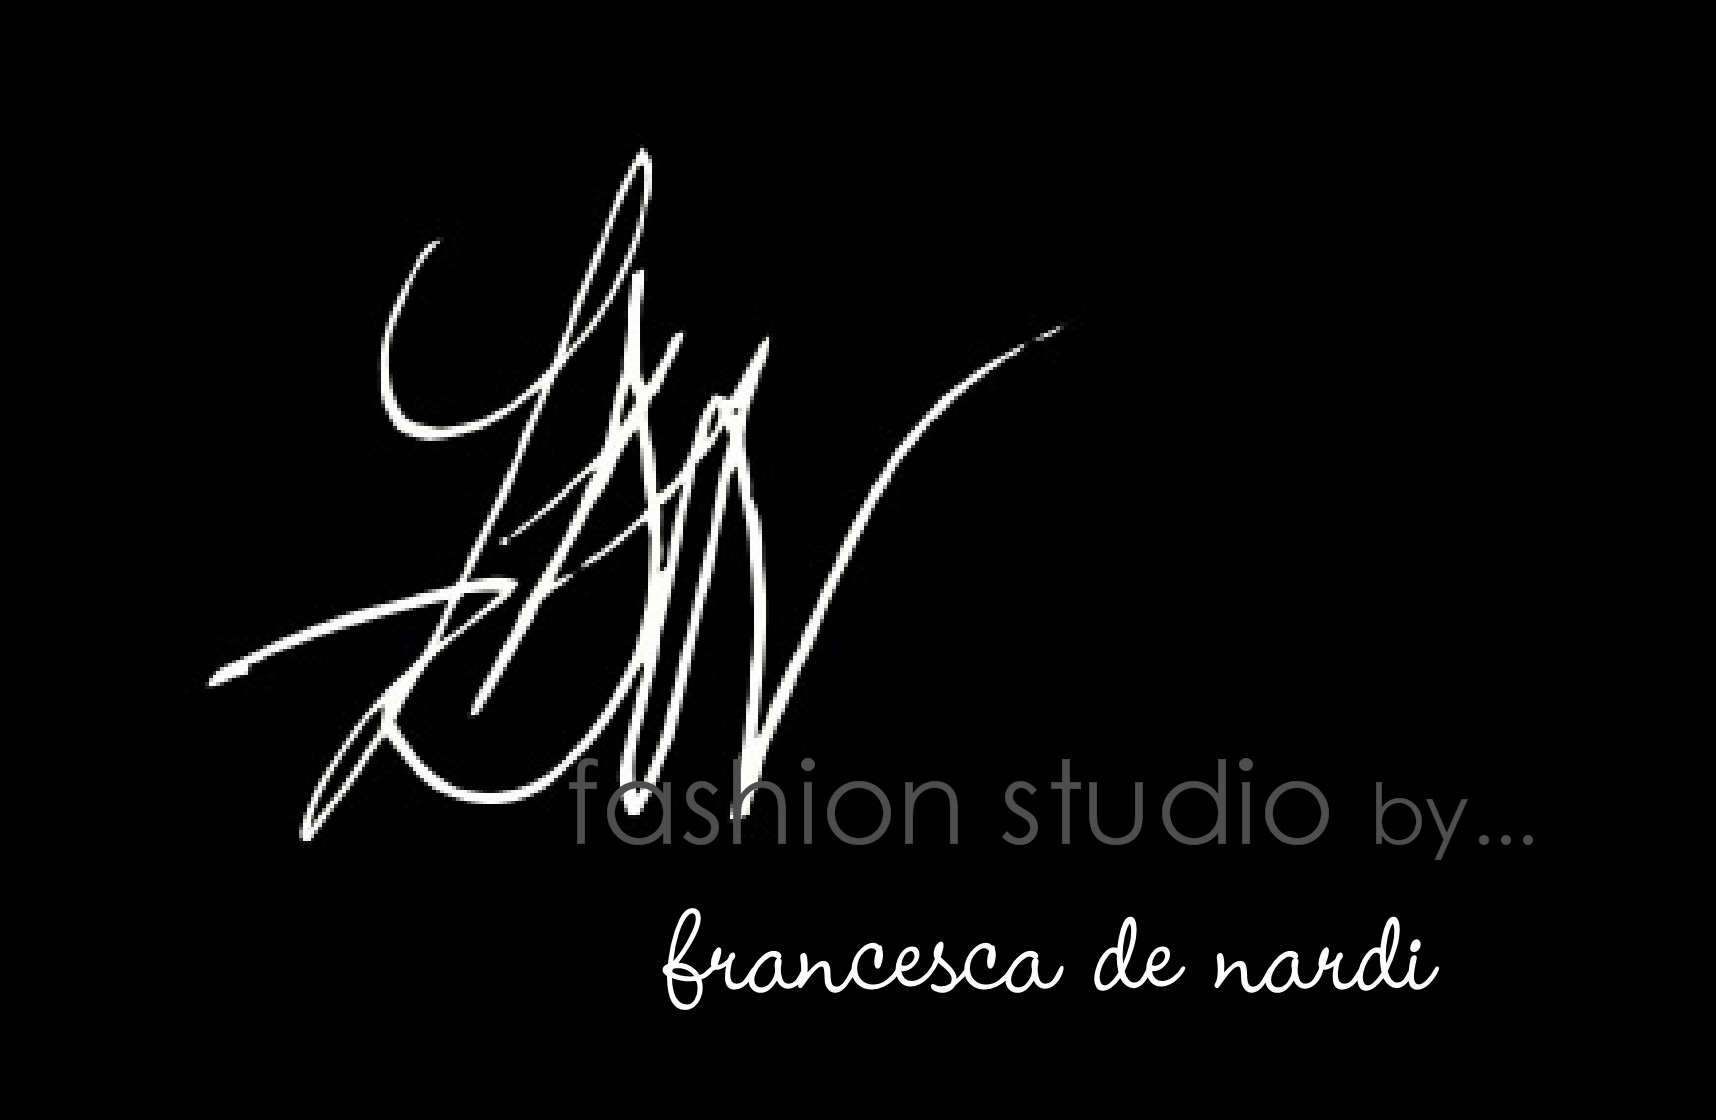 fdnfashion concept studio logo black